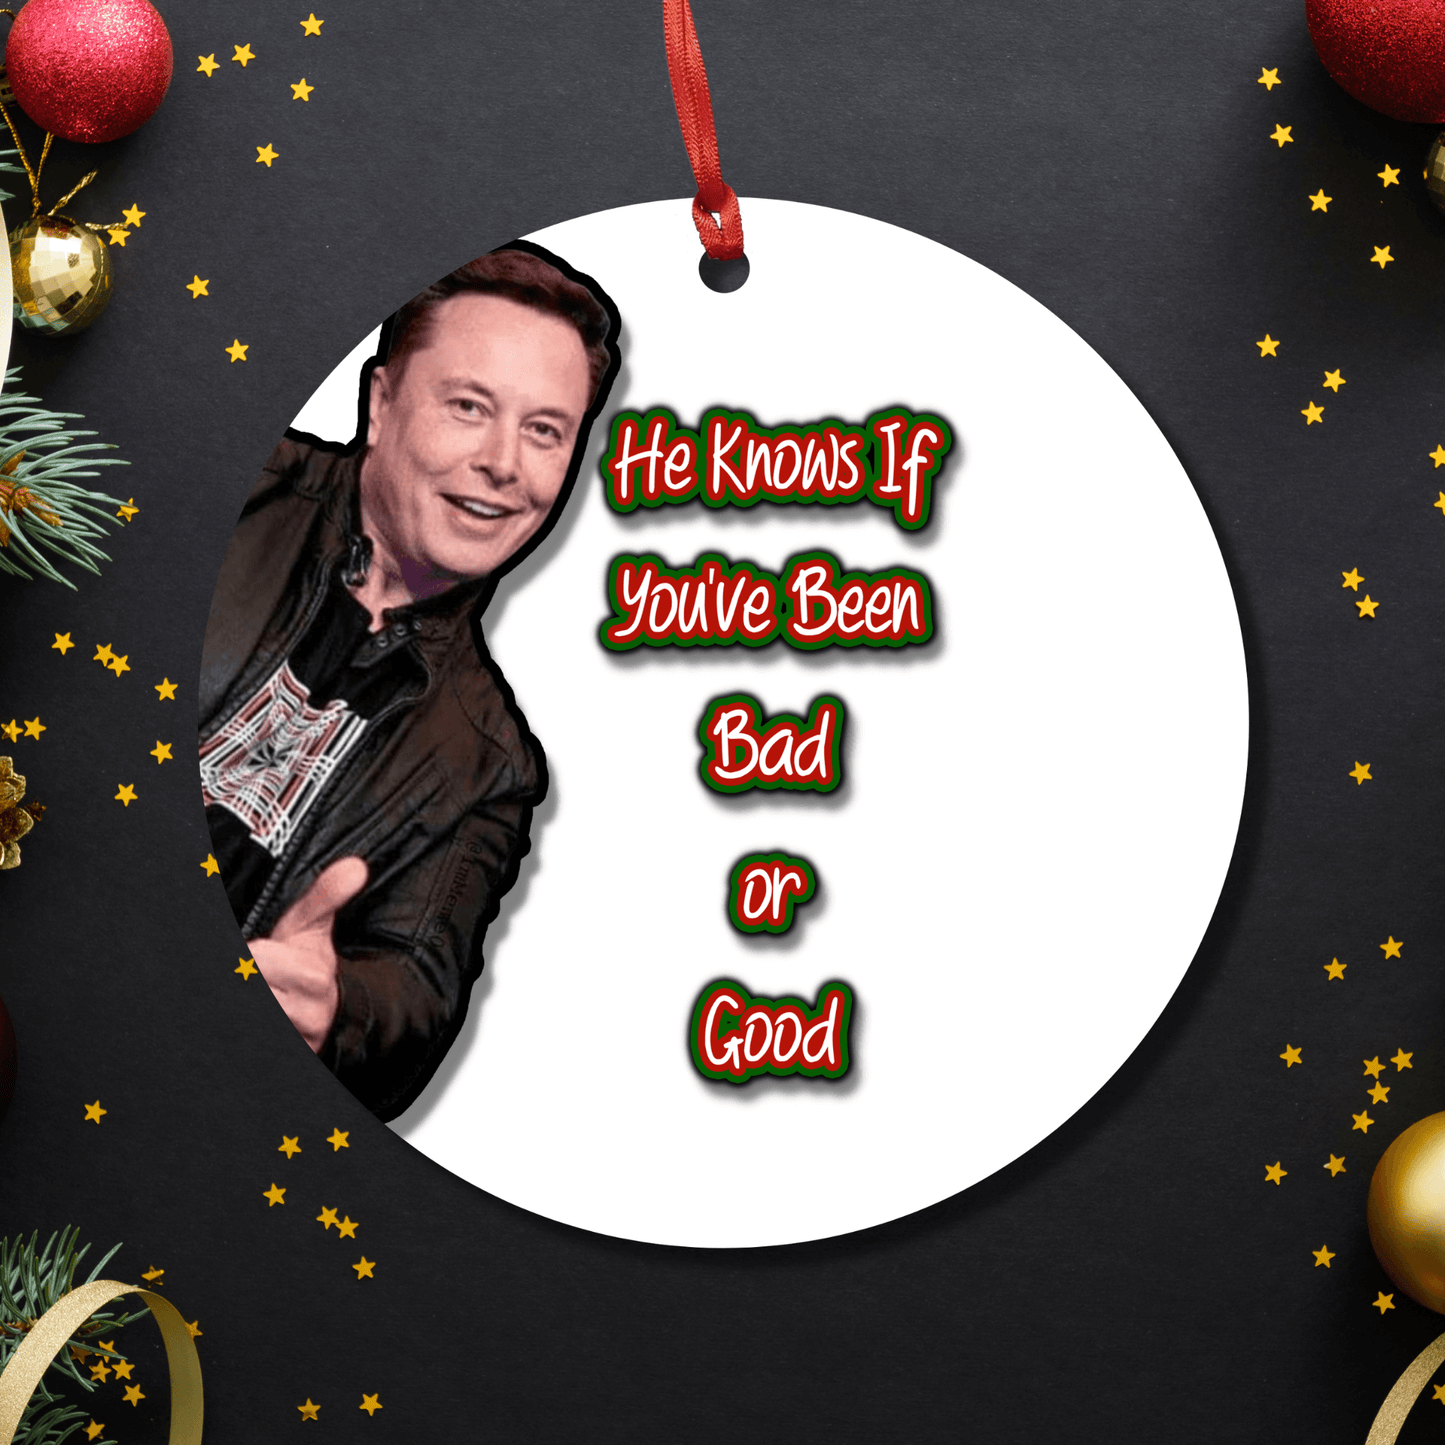 Elon Musk Ornament - Christmas Decoration - Gag Gift - Twitter Files - Funny Christmas Ornament - Good or Bad Ornament